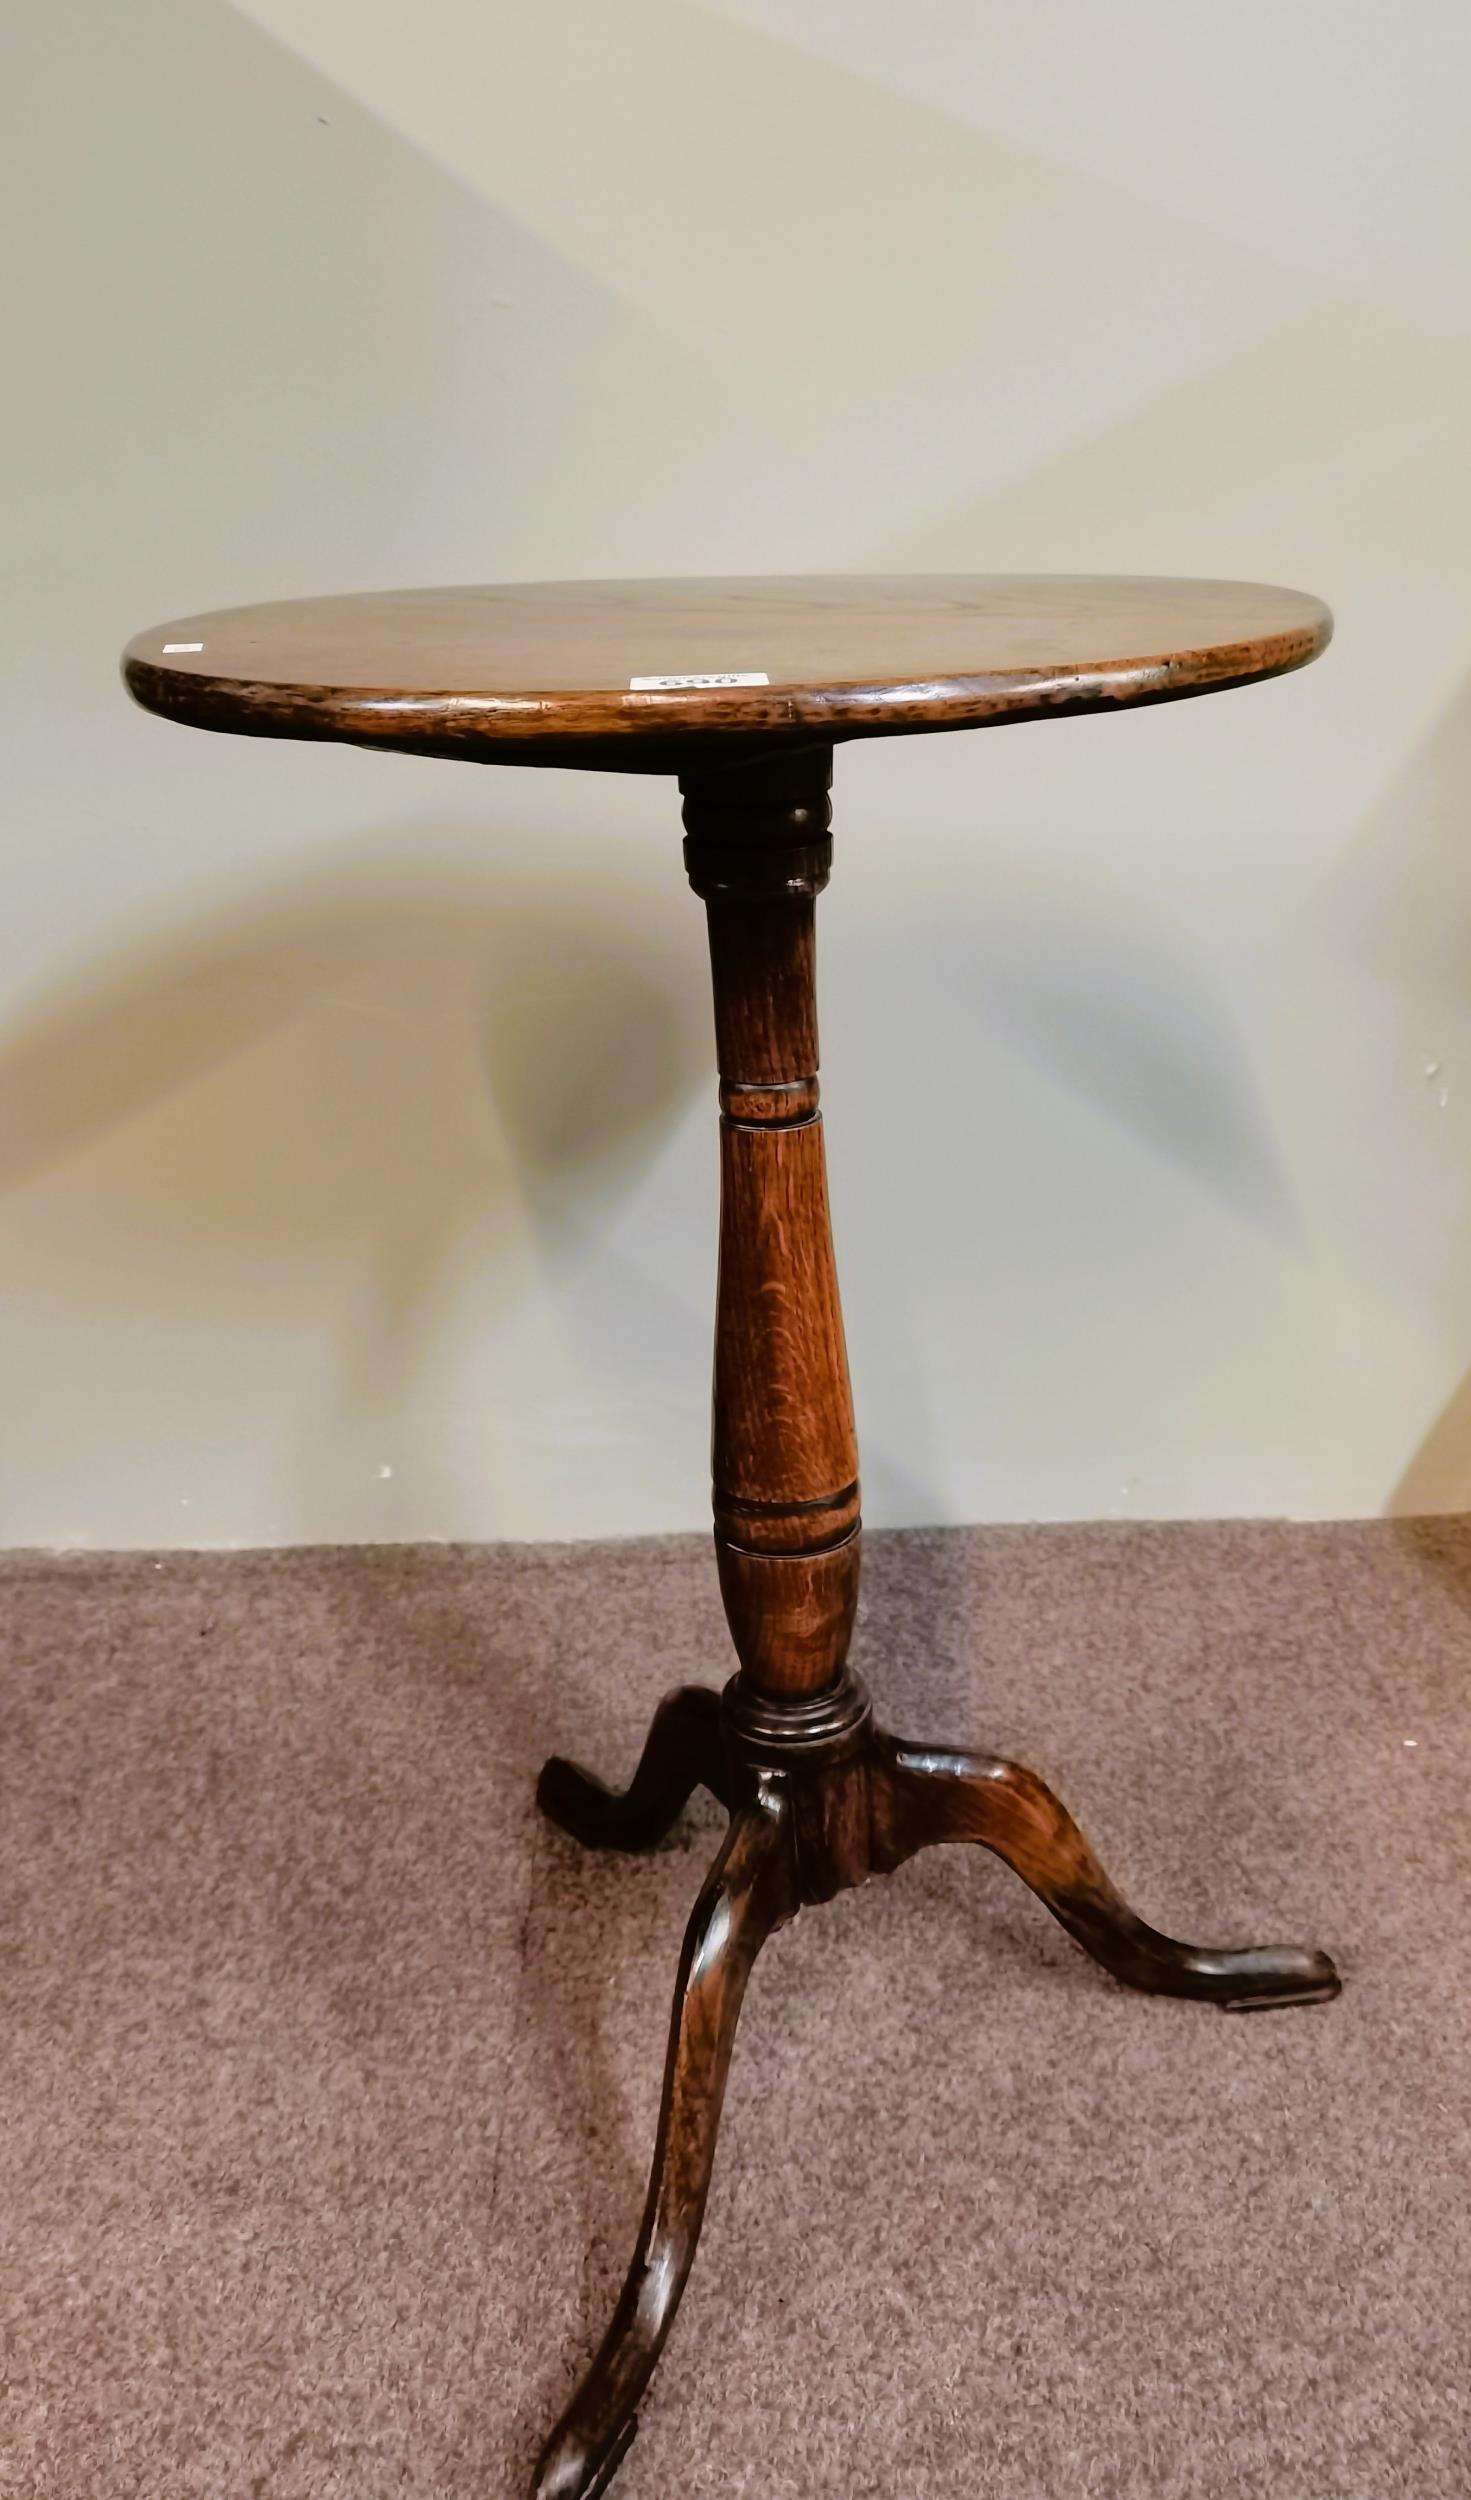 Antique oak Tripod table in ex condition 42cm dia. - Image 2 of 2